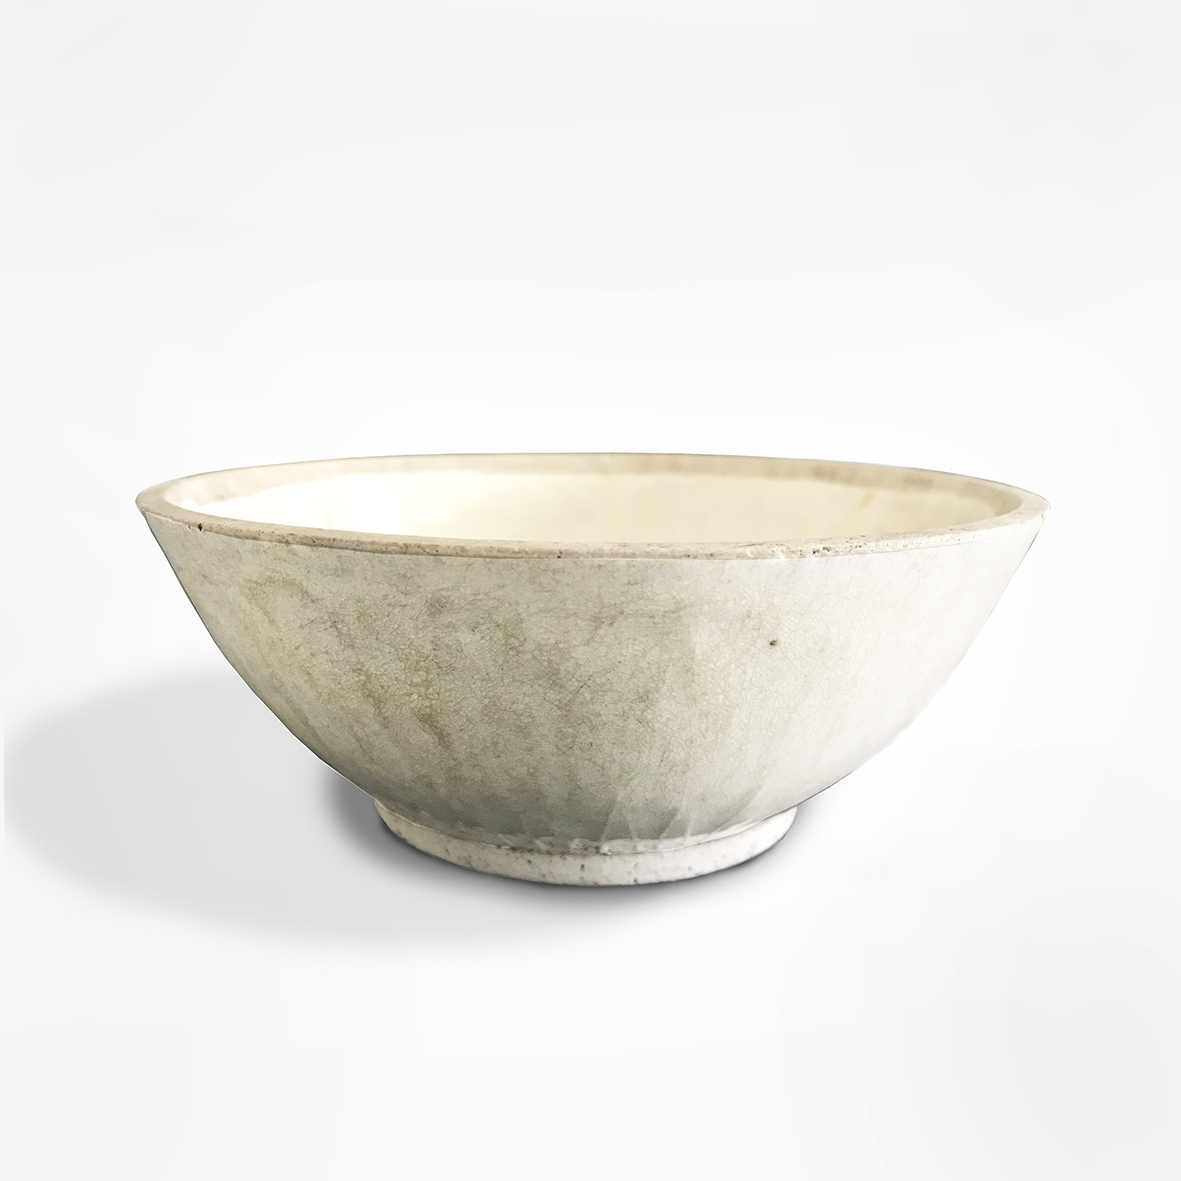 Creme white Dehua bowl | Ceramic | China | Song Dynasty | basedonart gallery